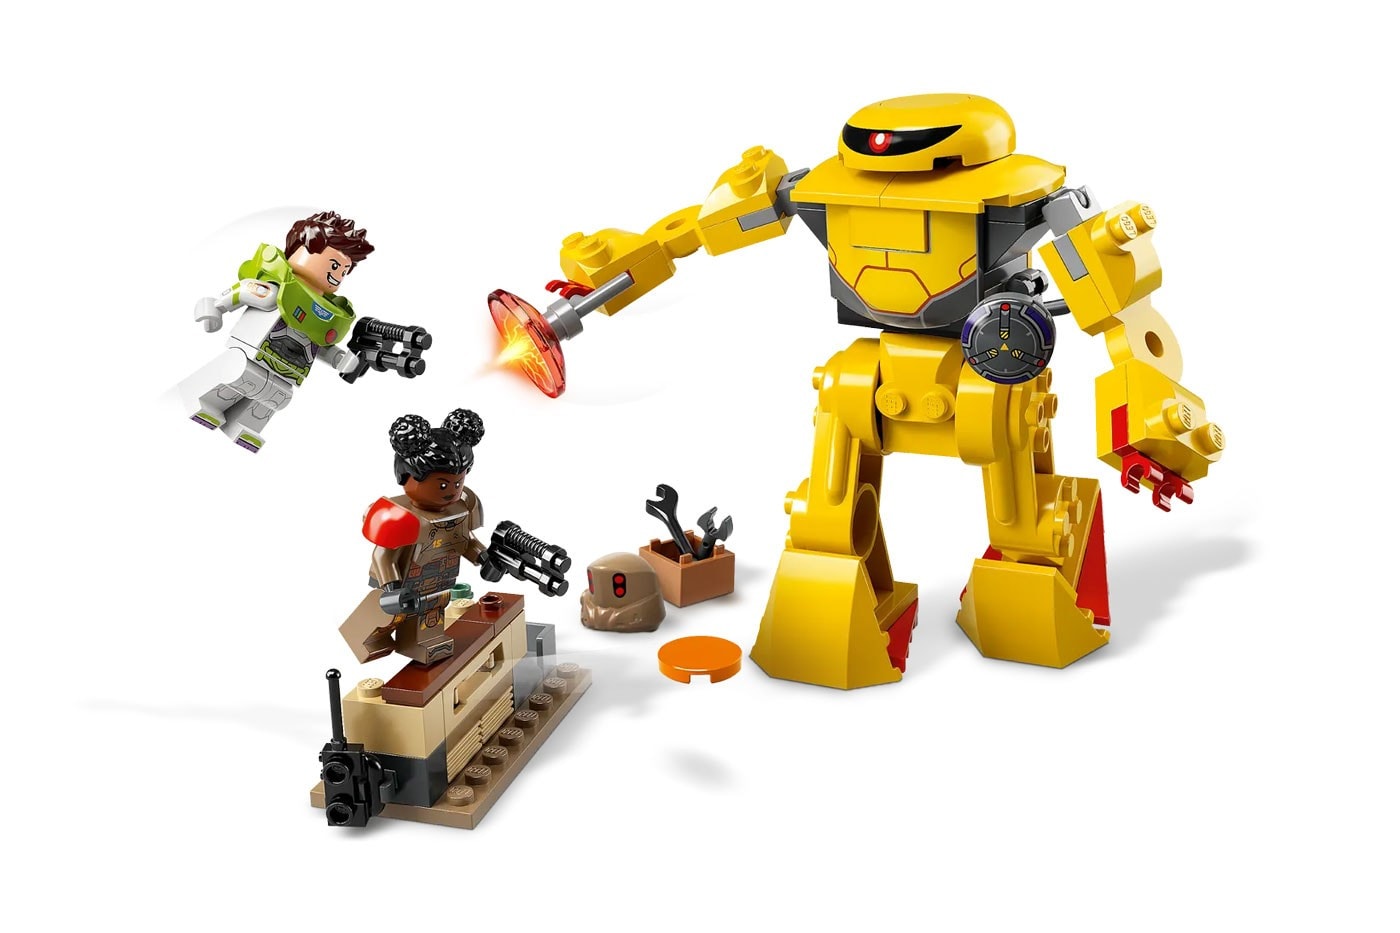 LEGO 一次推出三款 Disney Pixar 最新電影《Lightyear》主題模型套裝 